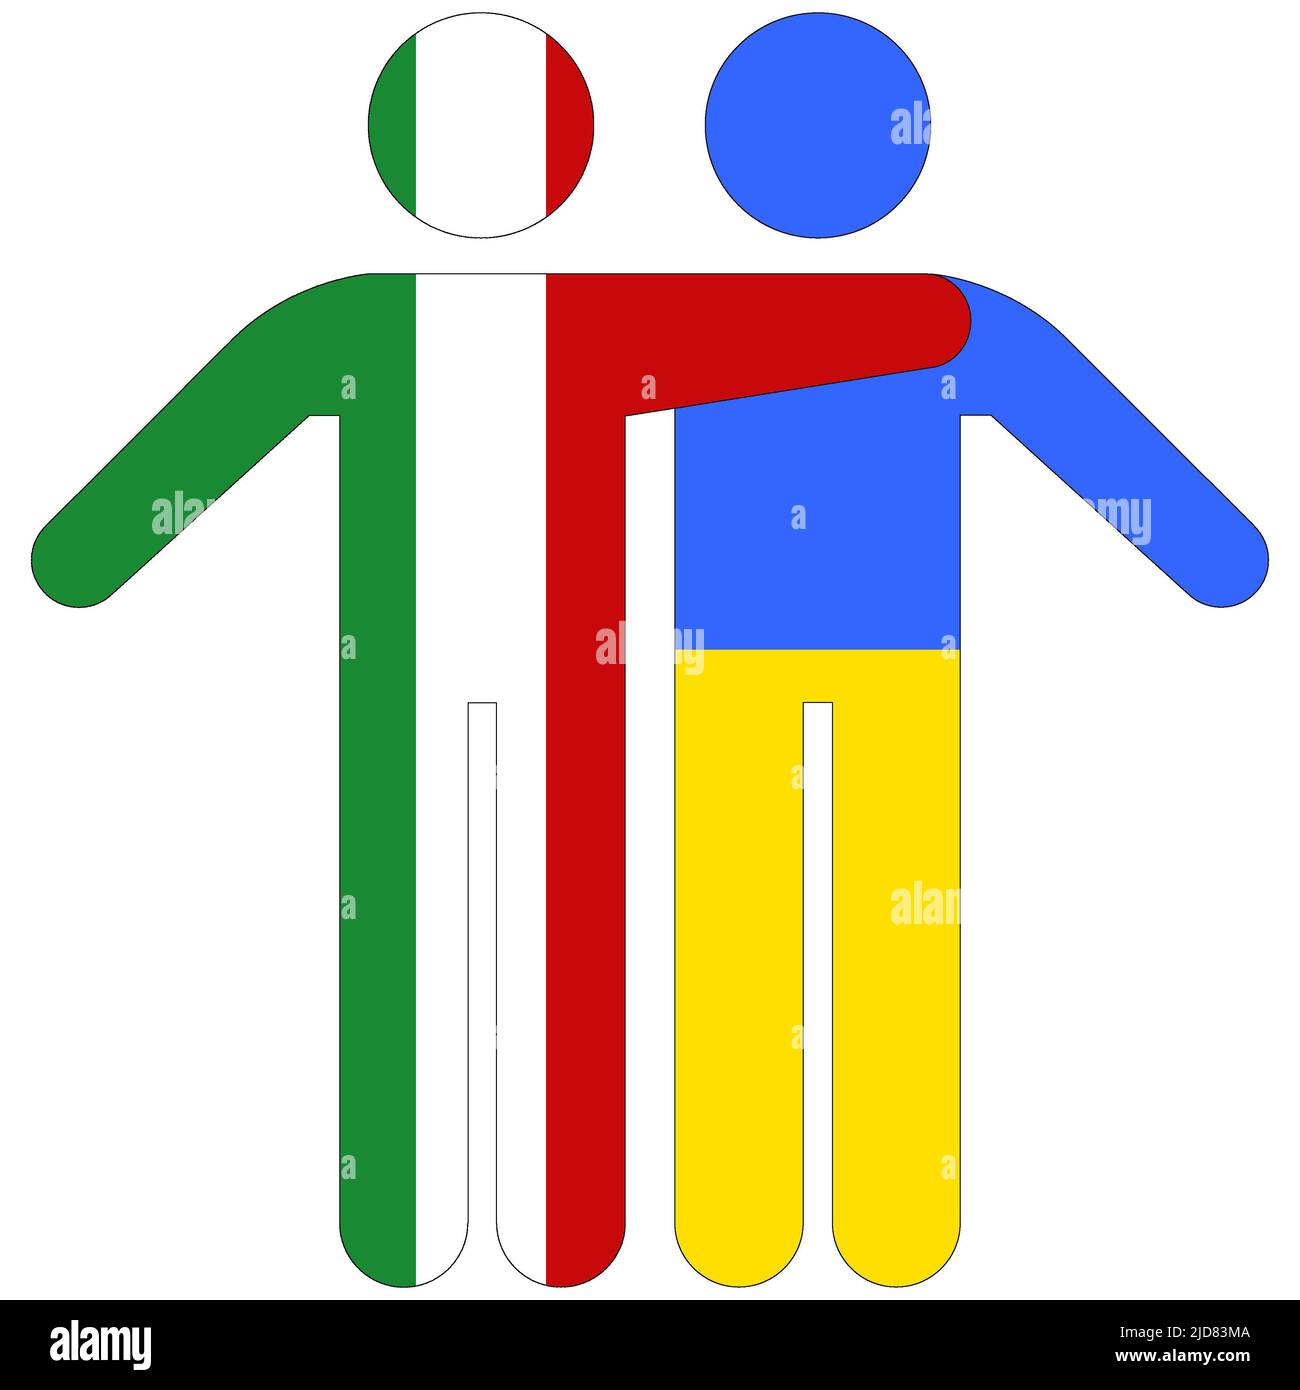 Italy - Ukraine : friendship concept on white background Stock Photo